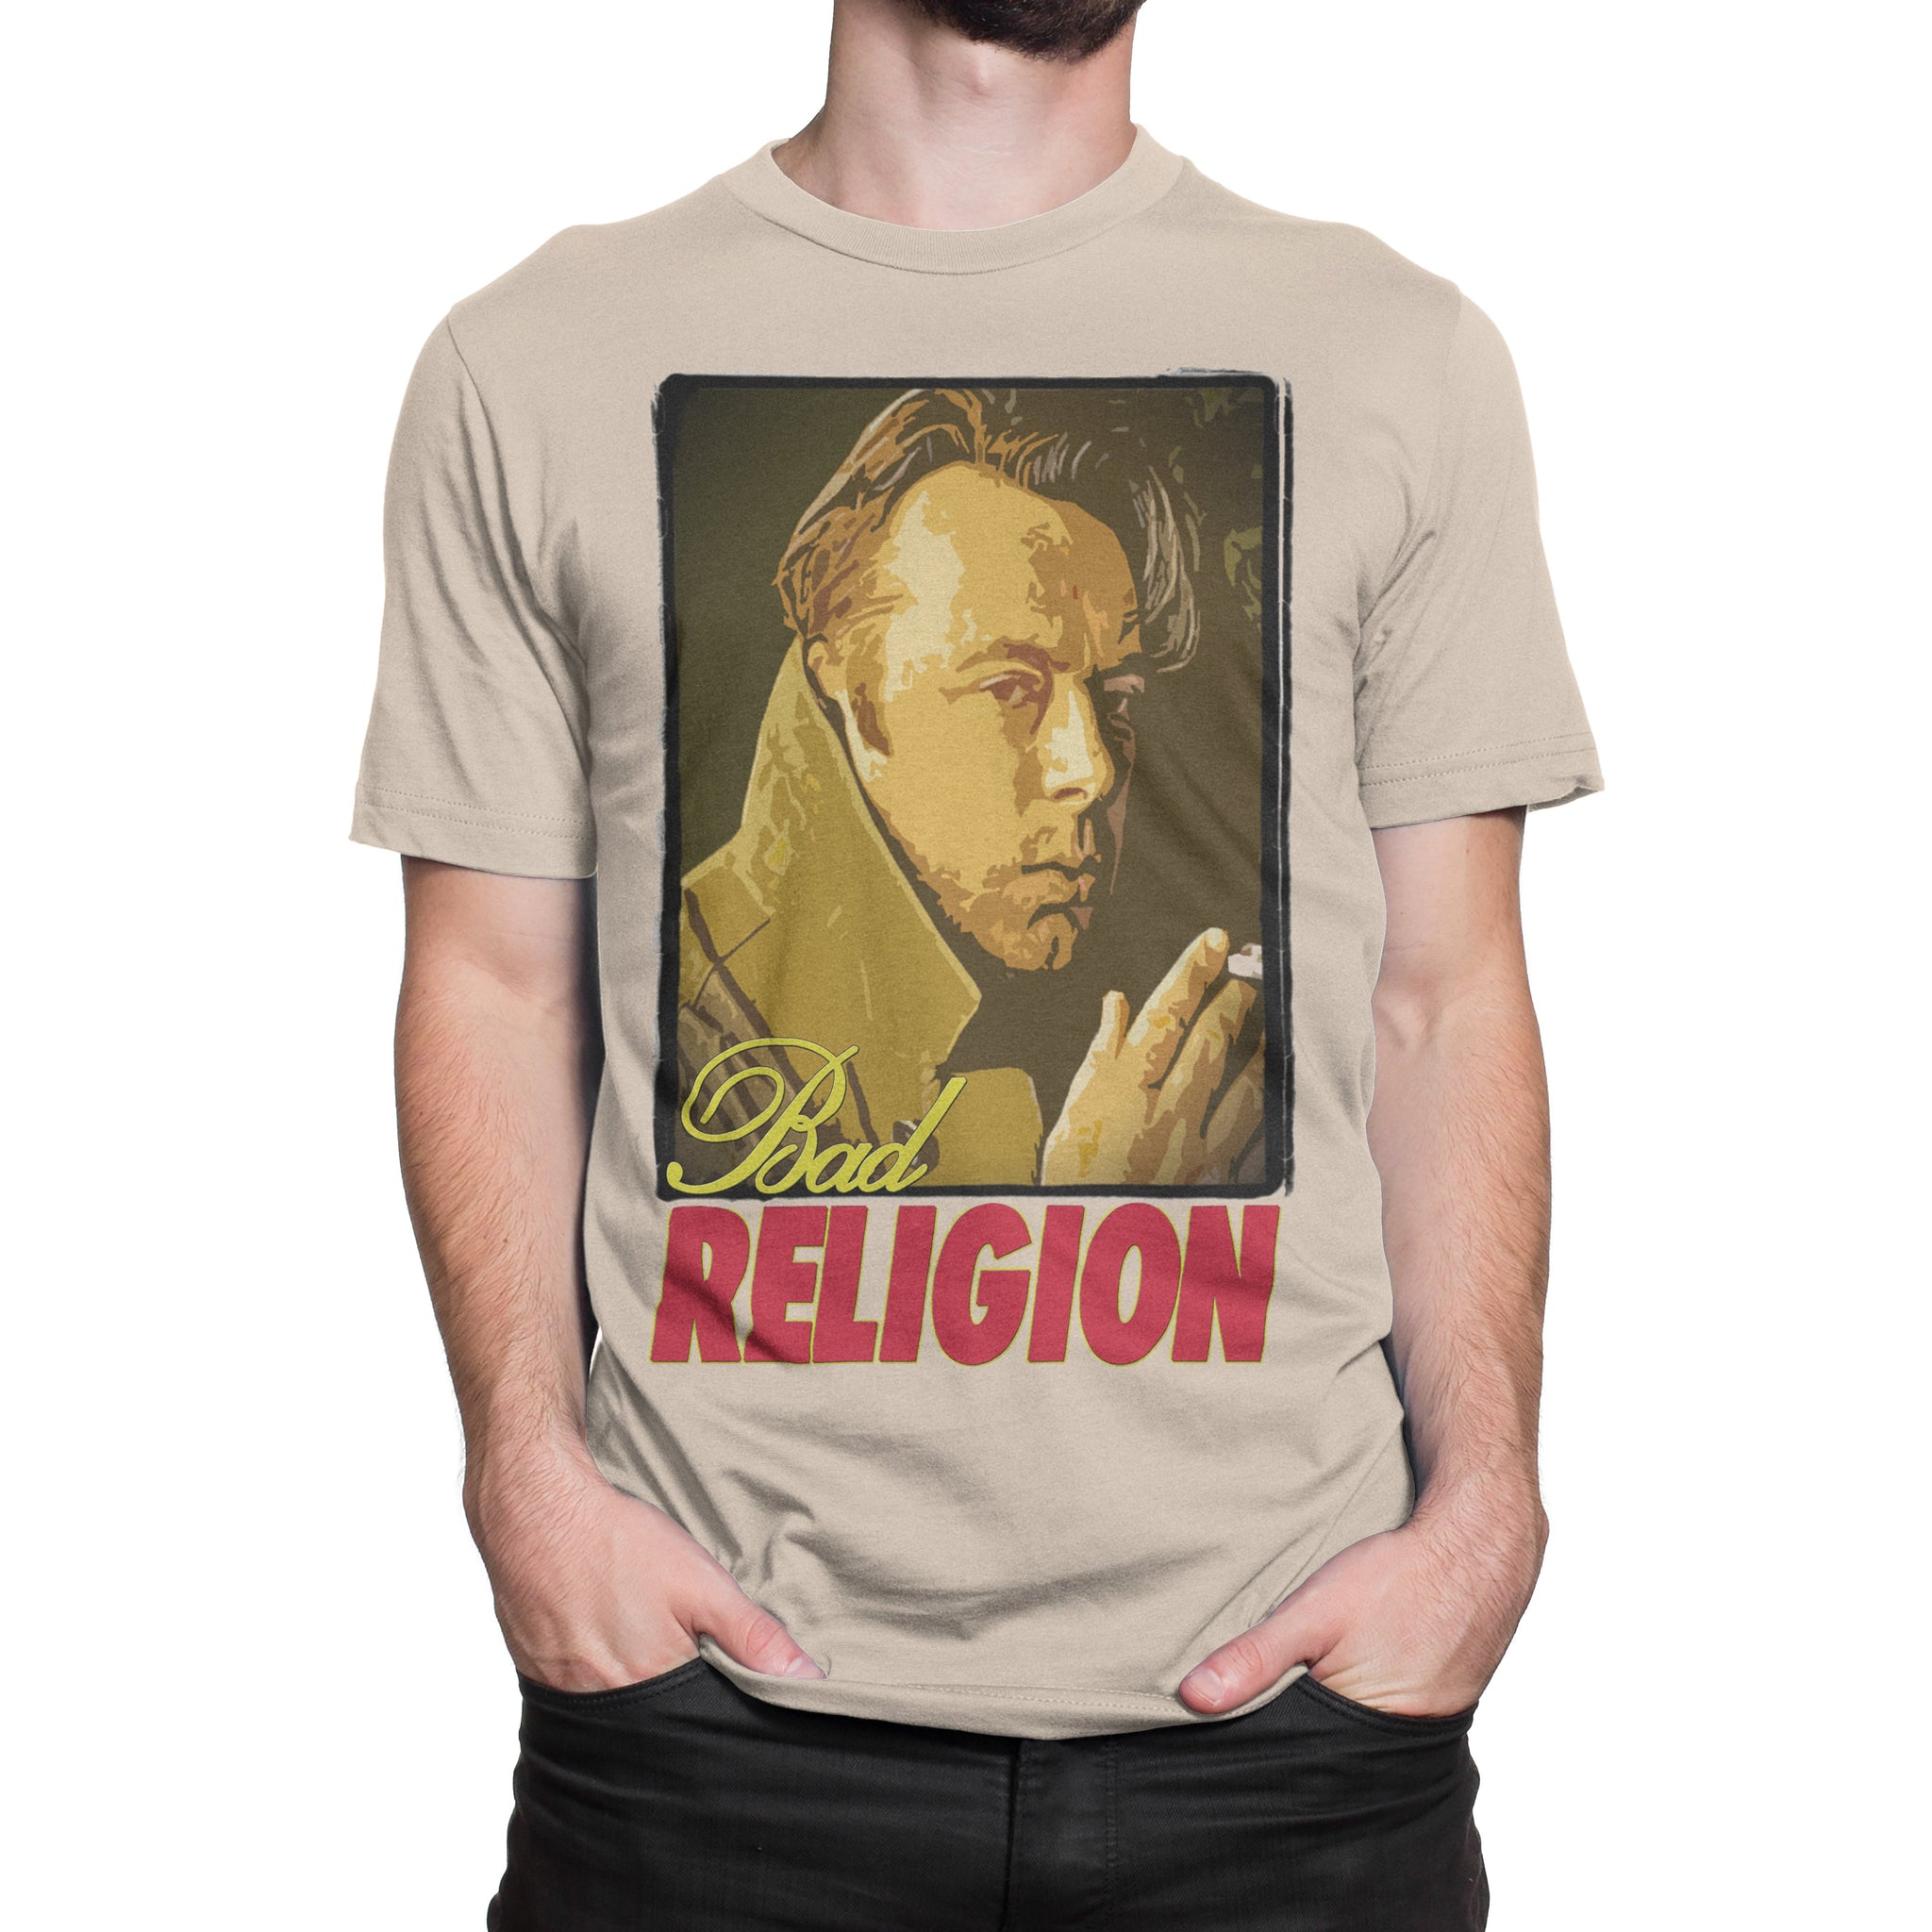 Christopher Hitchens "Bad Religion" Tee